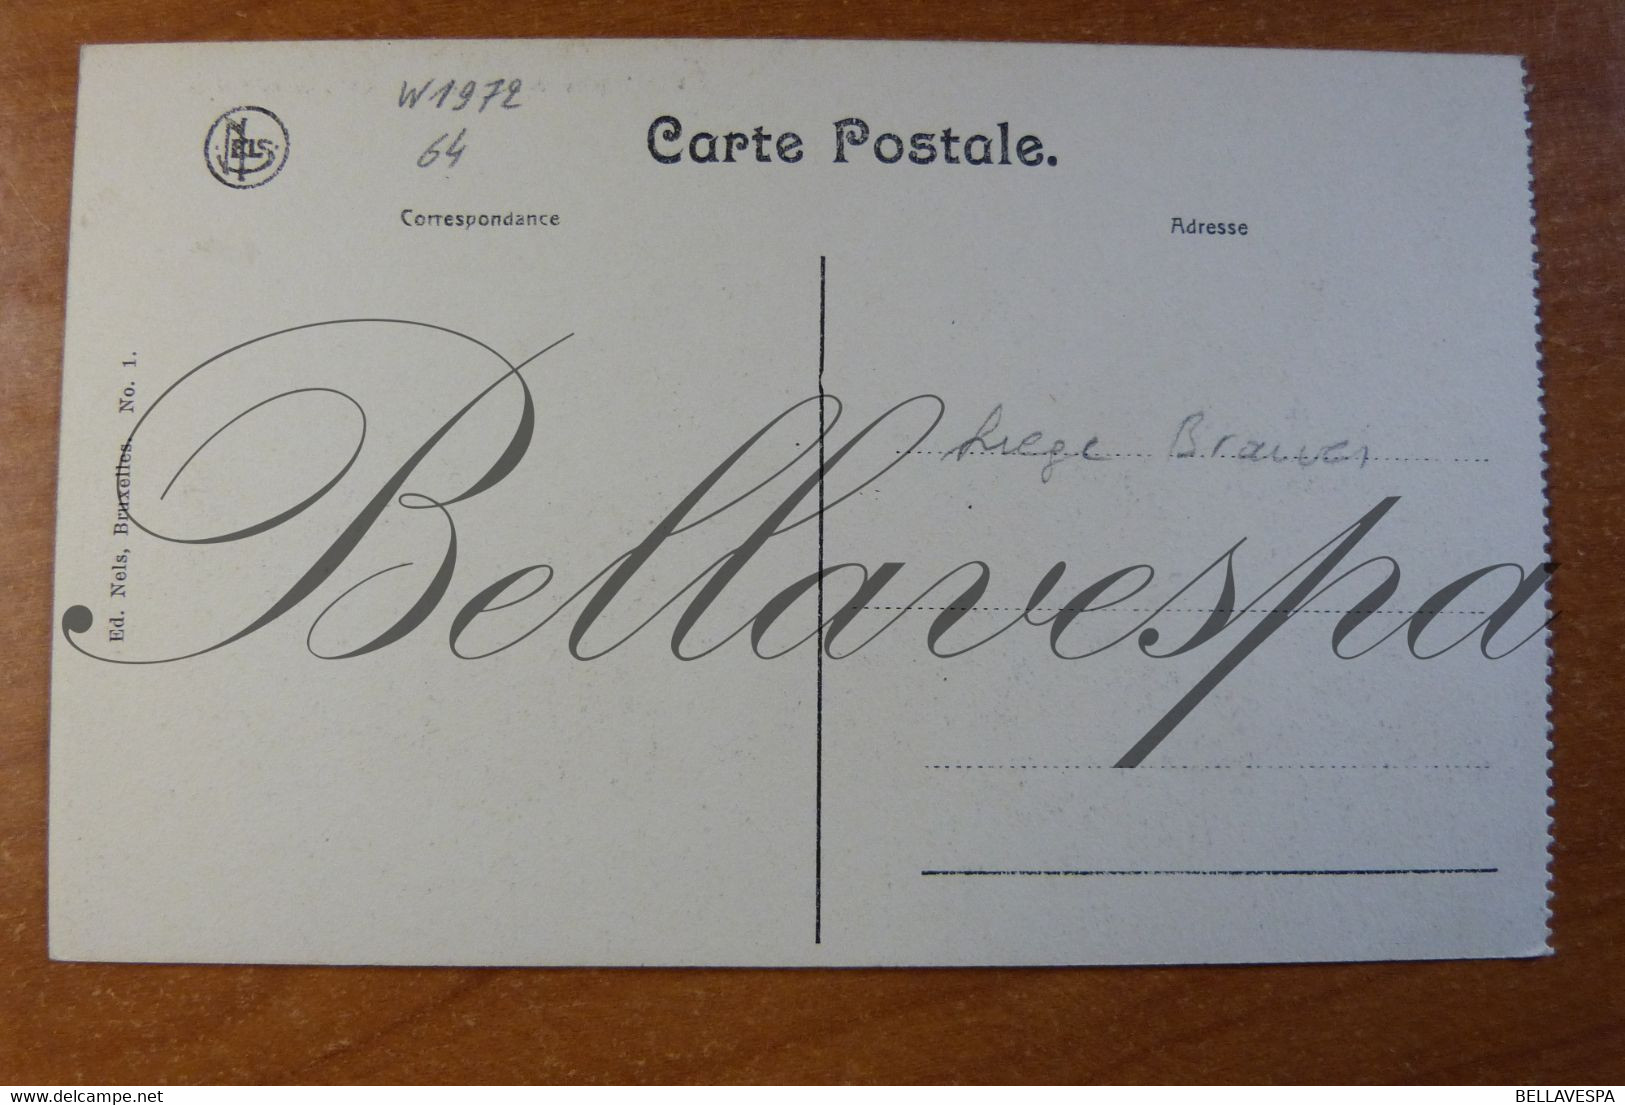 Postkaarten , cartes postales ancien CPA  Lot x 23 piece Provence de   Liége.